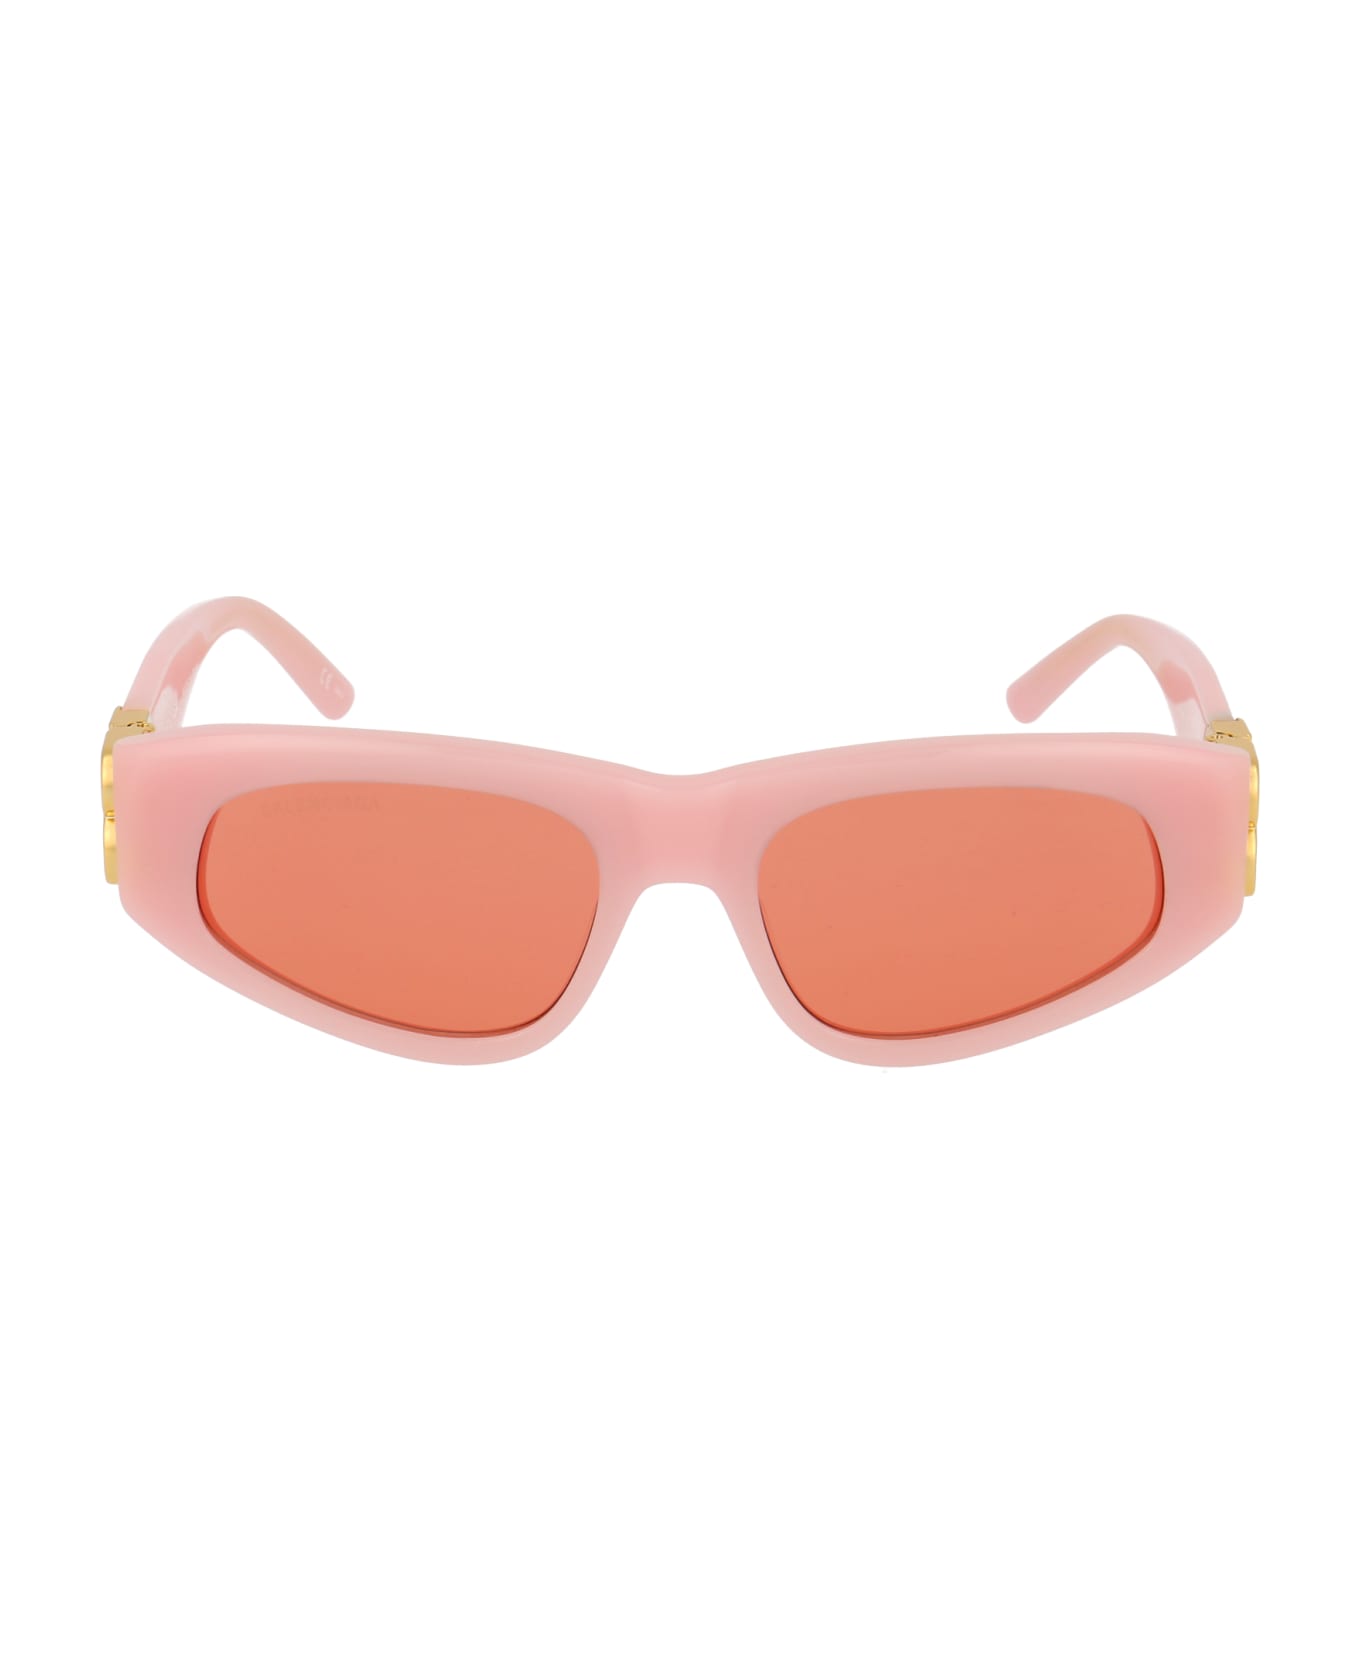 Balenciaga Eyewear Bb0095s Sunglasses - 003 PINK GOLD RED